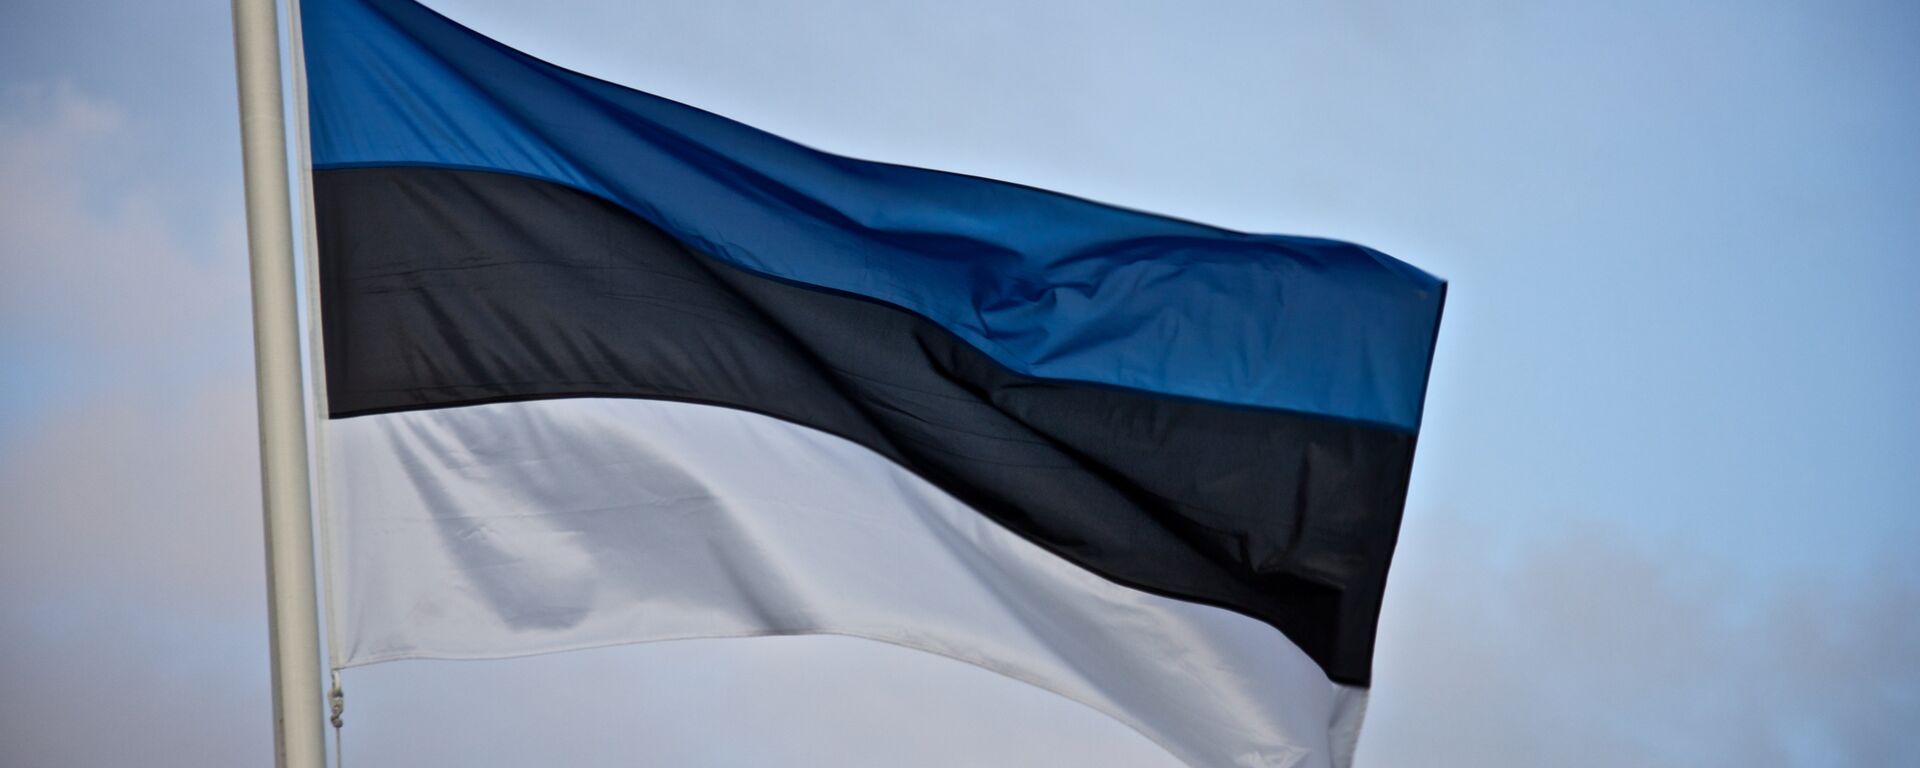 Эстонский флаг. Иллюстративное фото. - Sputnik Латвия, 1920, 01.08.2022